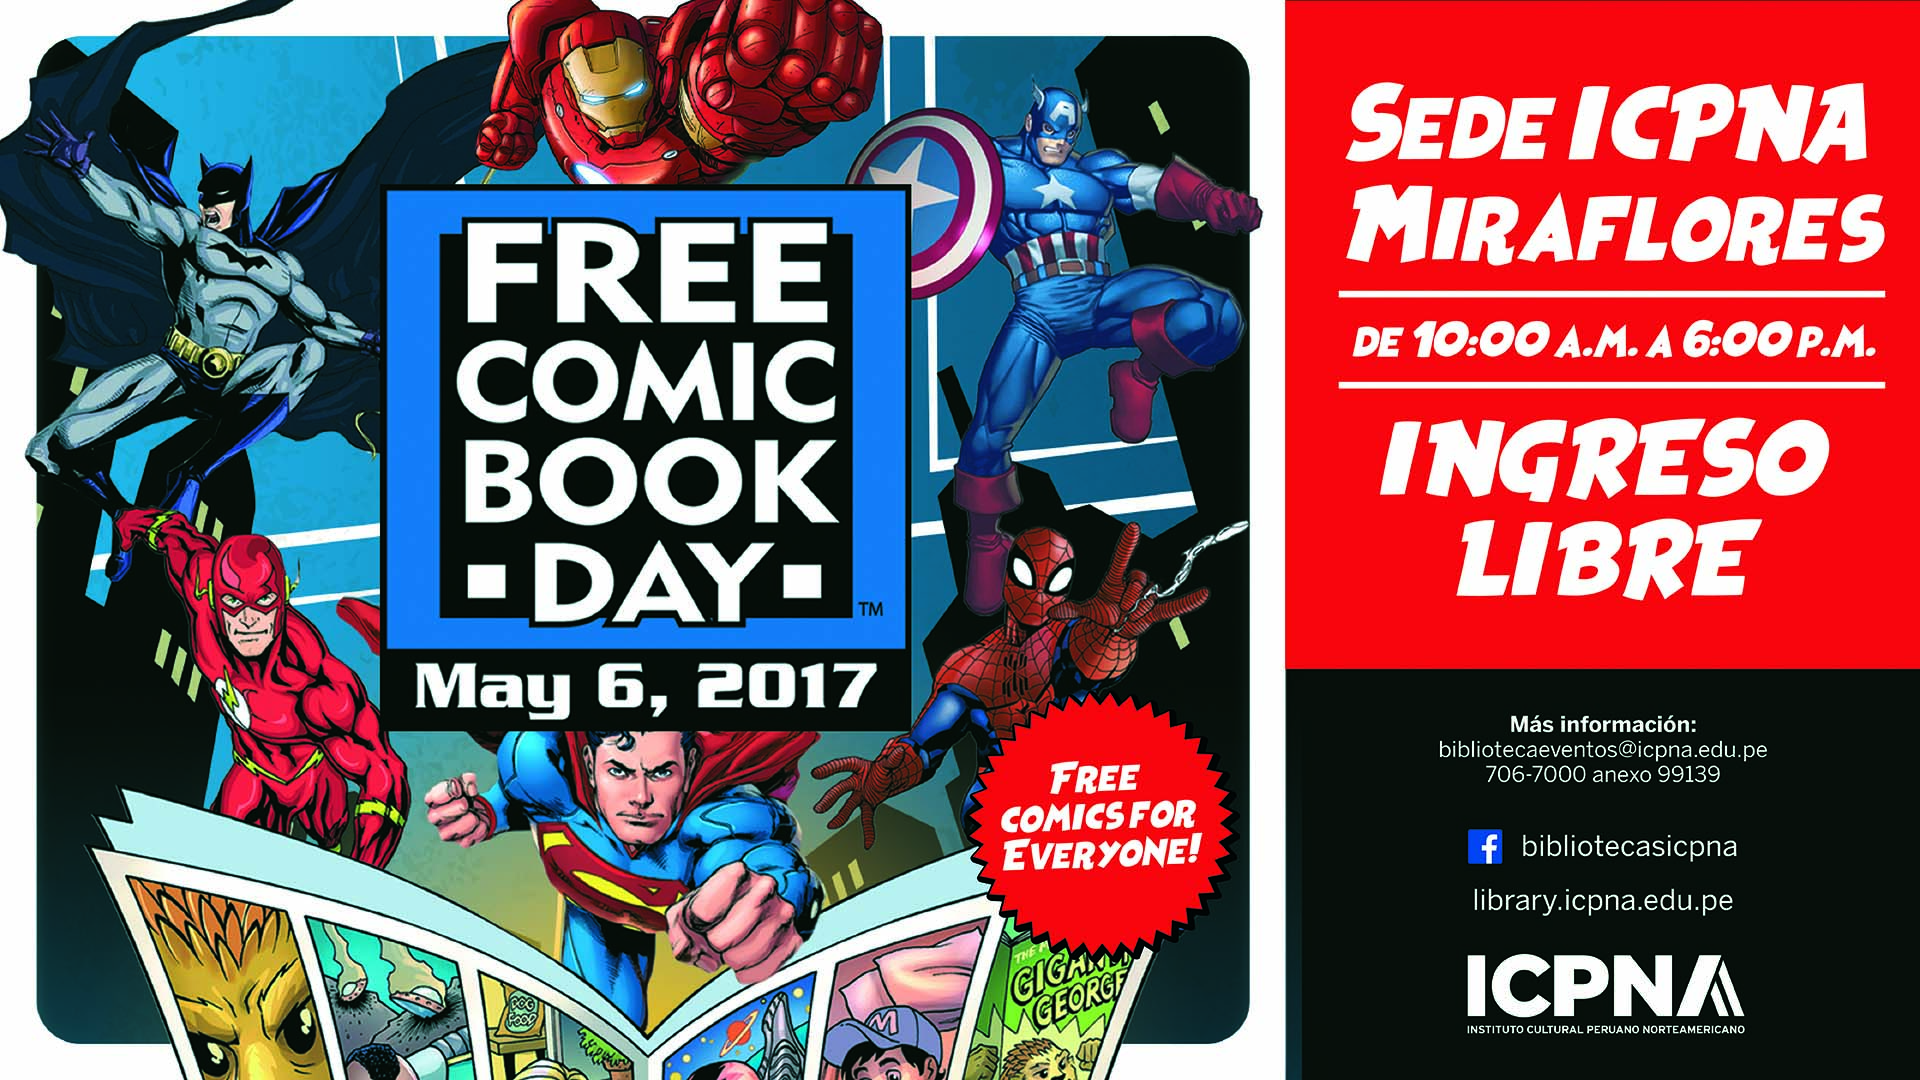 Maana se celebrar el Free Comic Book Day en el ICPNA